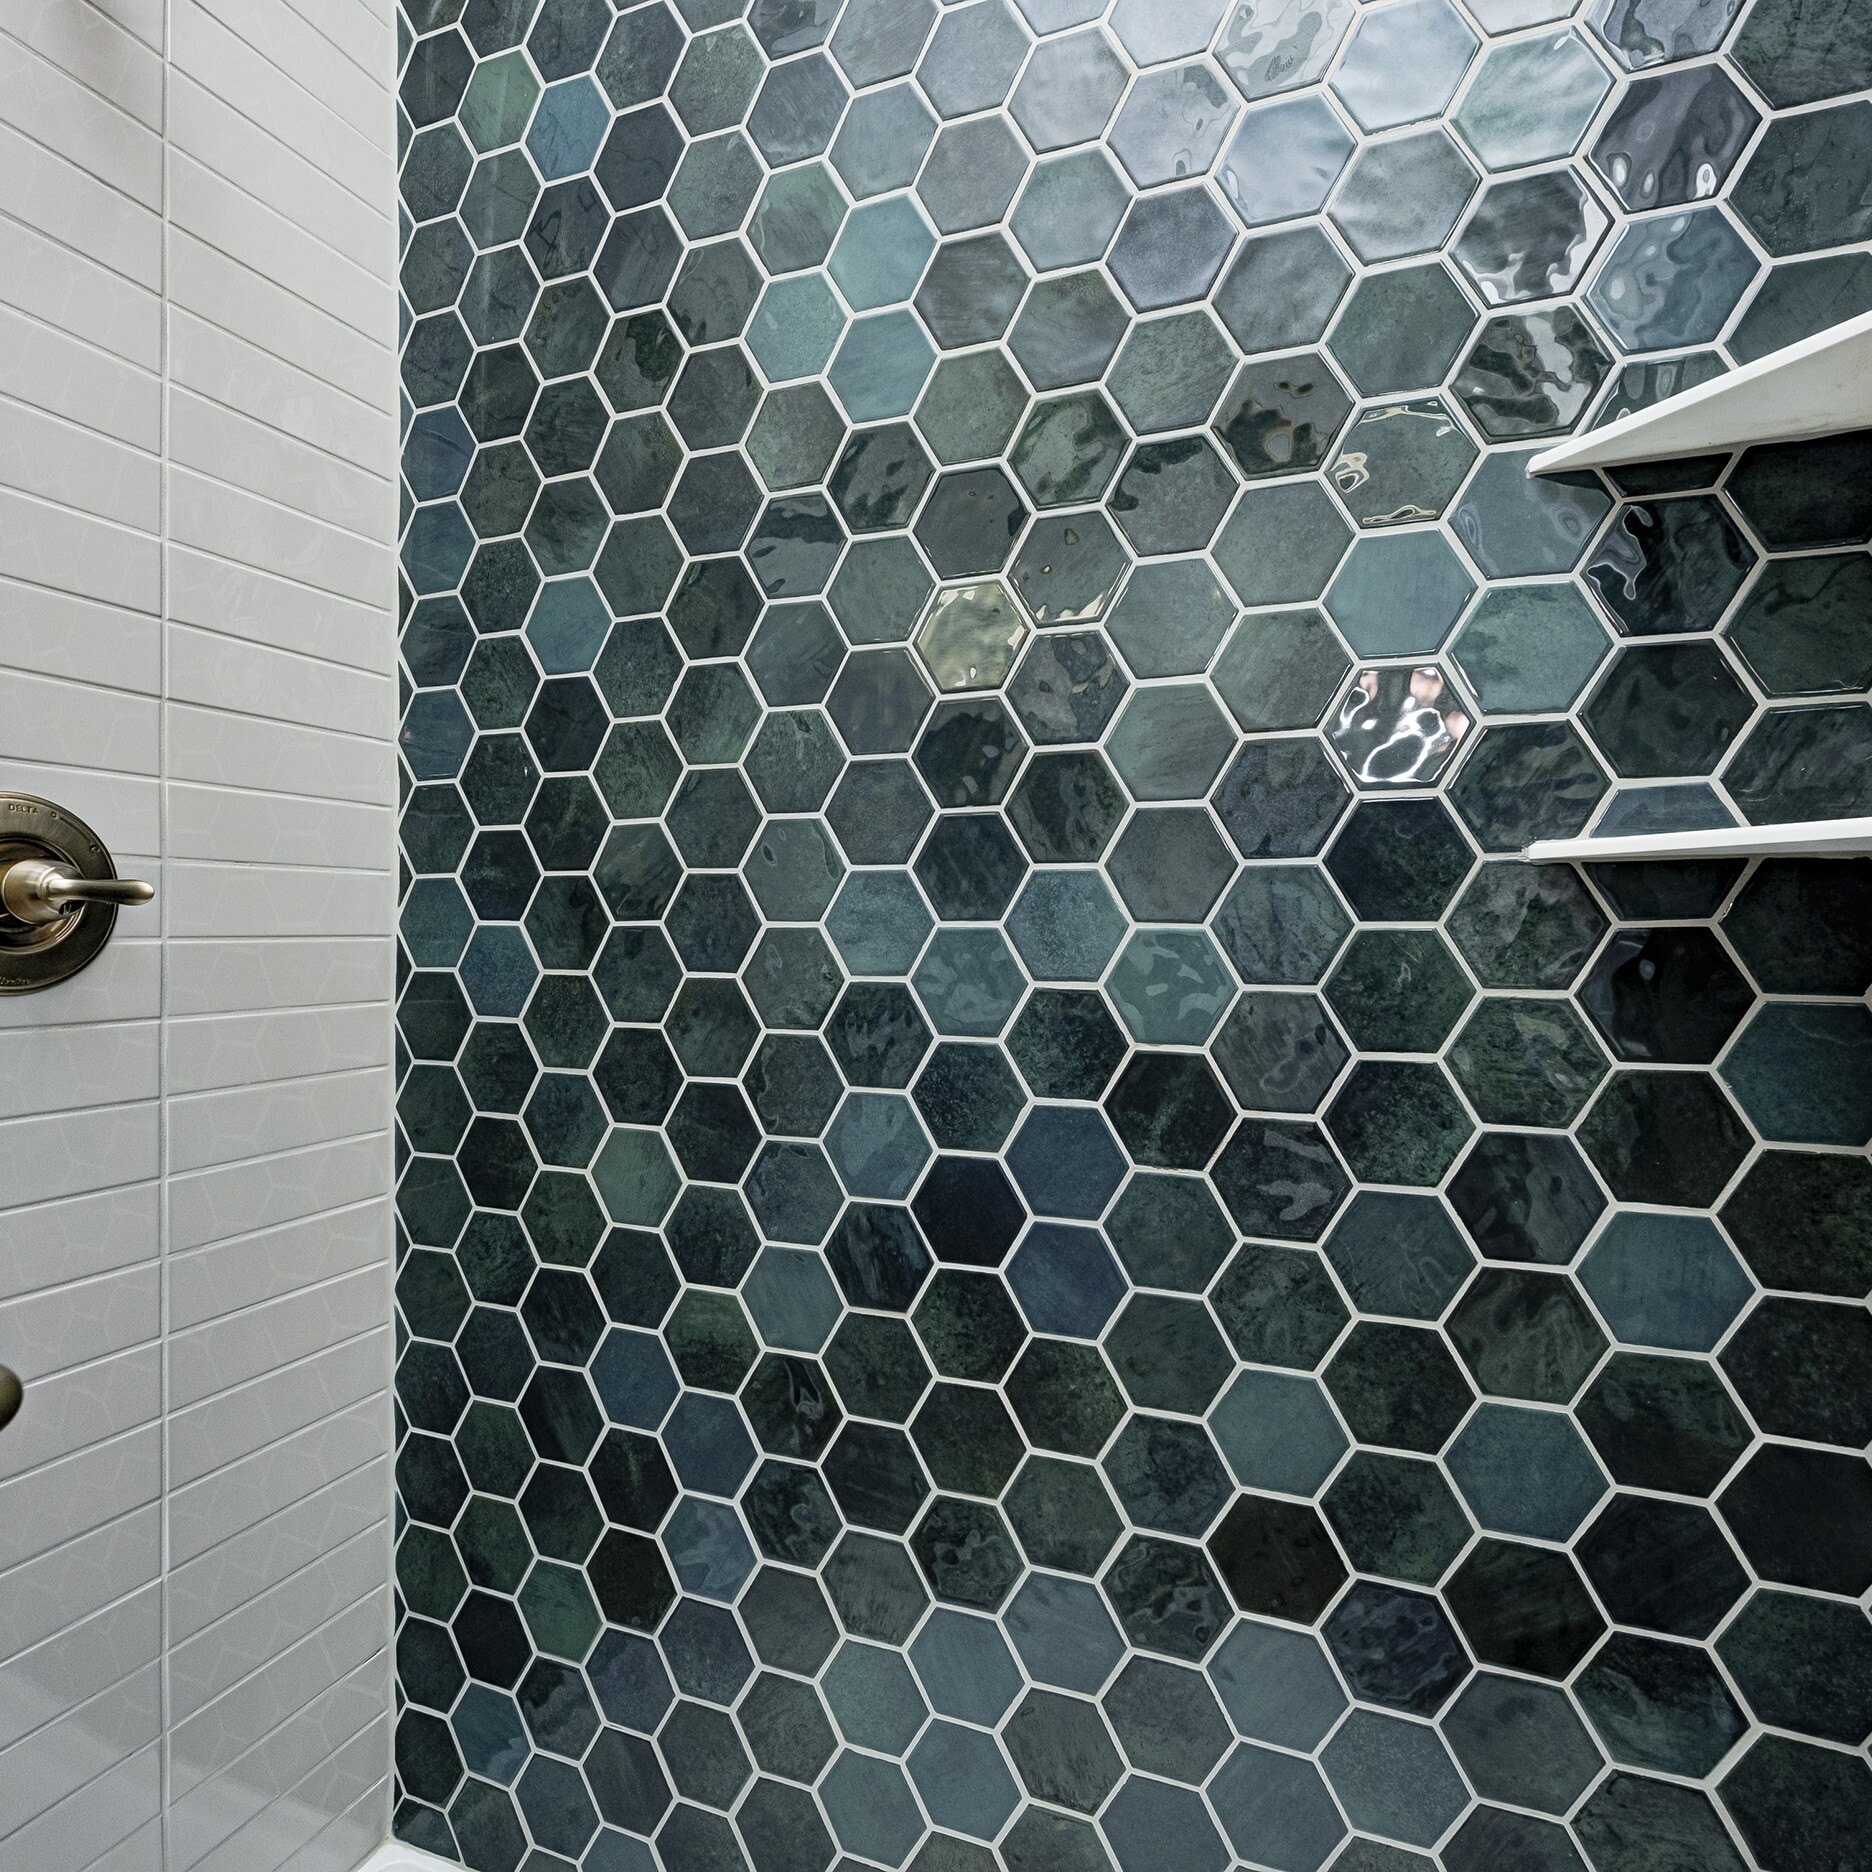 A blue tiled shower with a glass shelf.